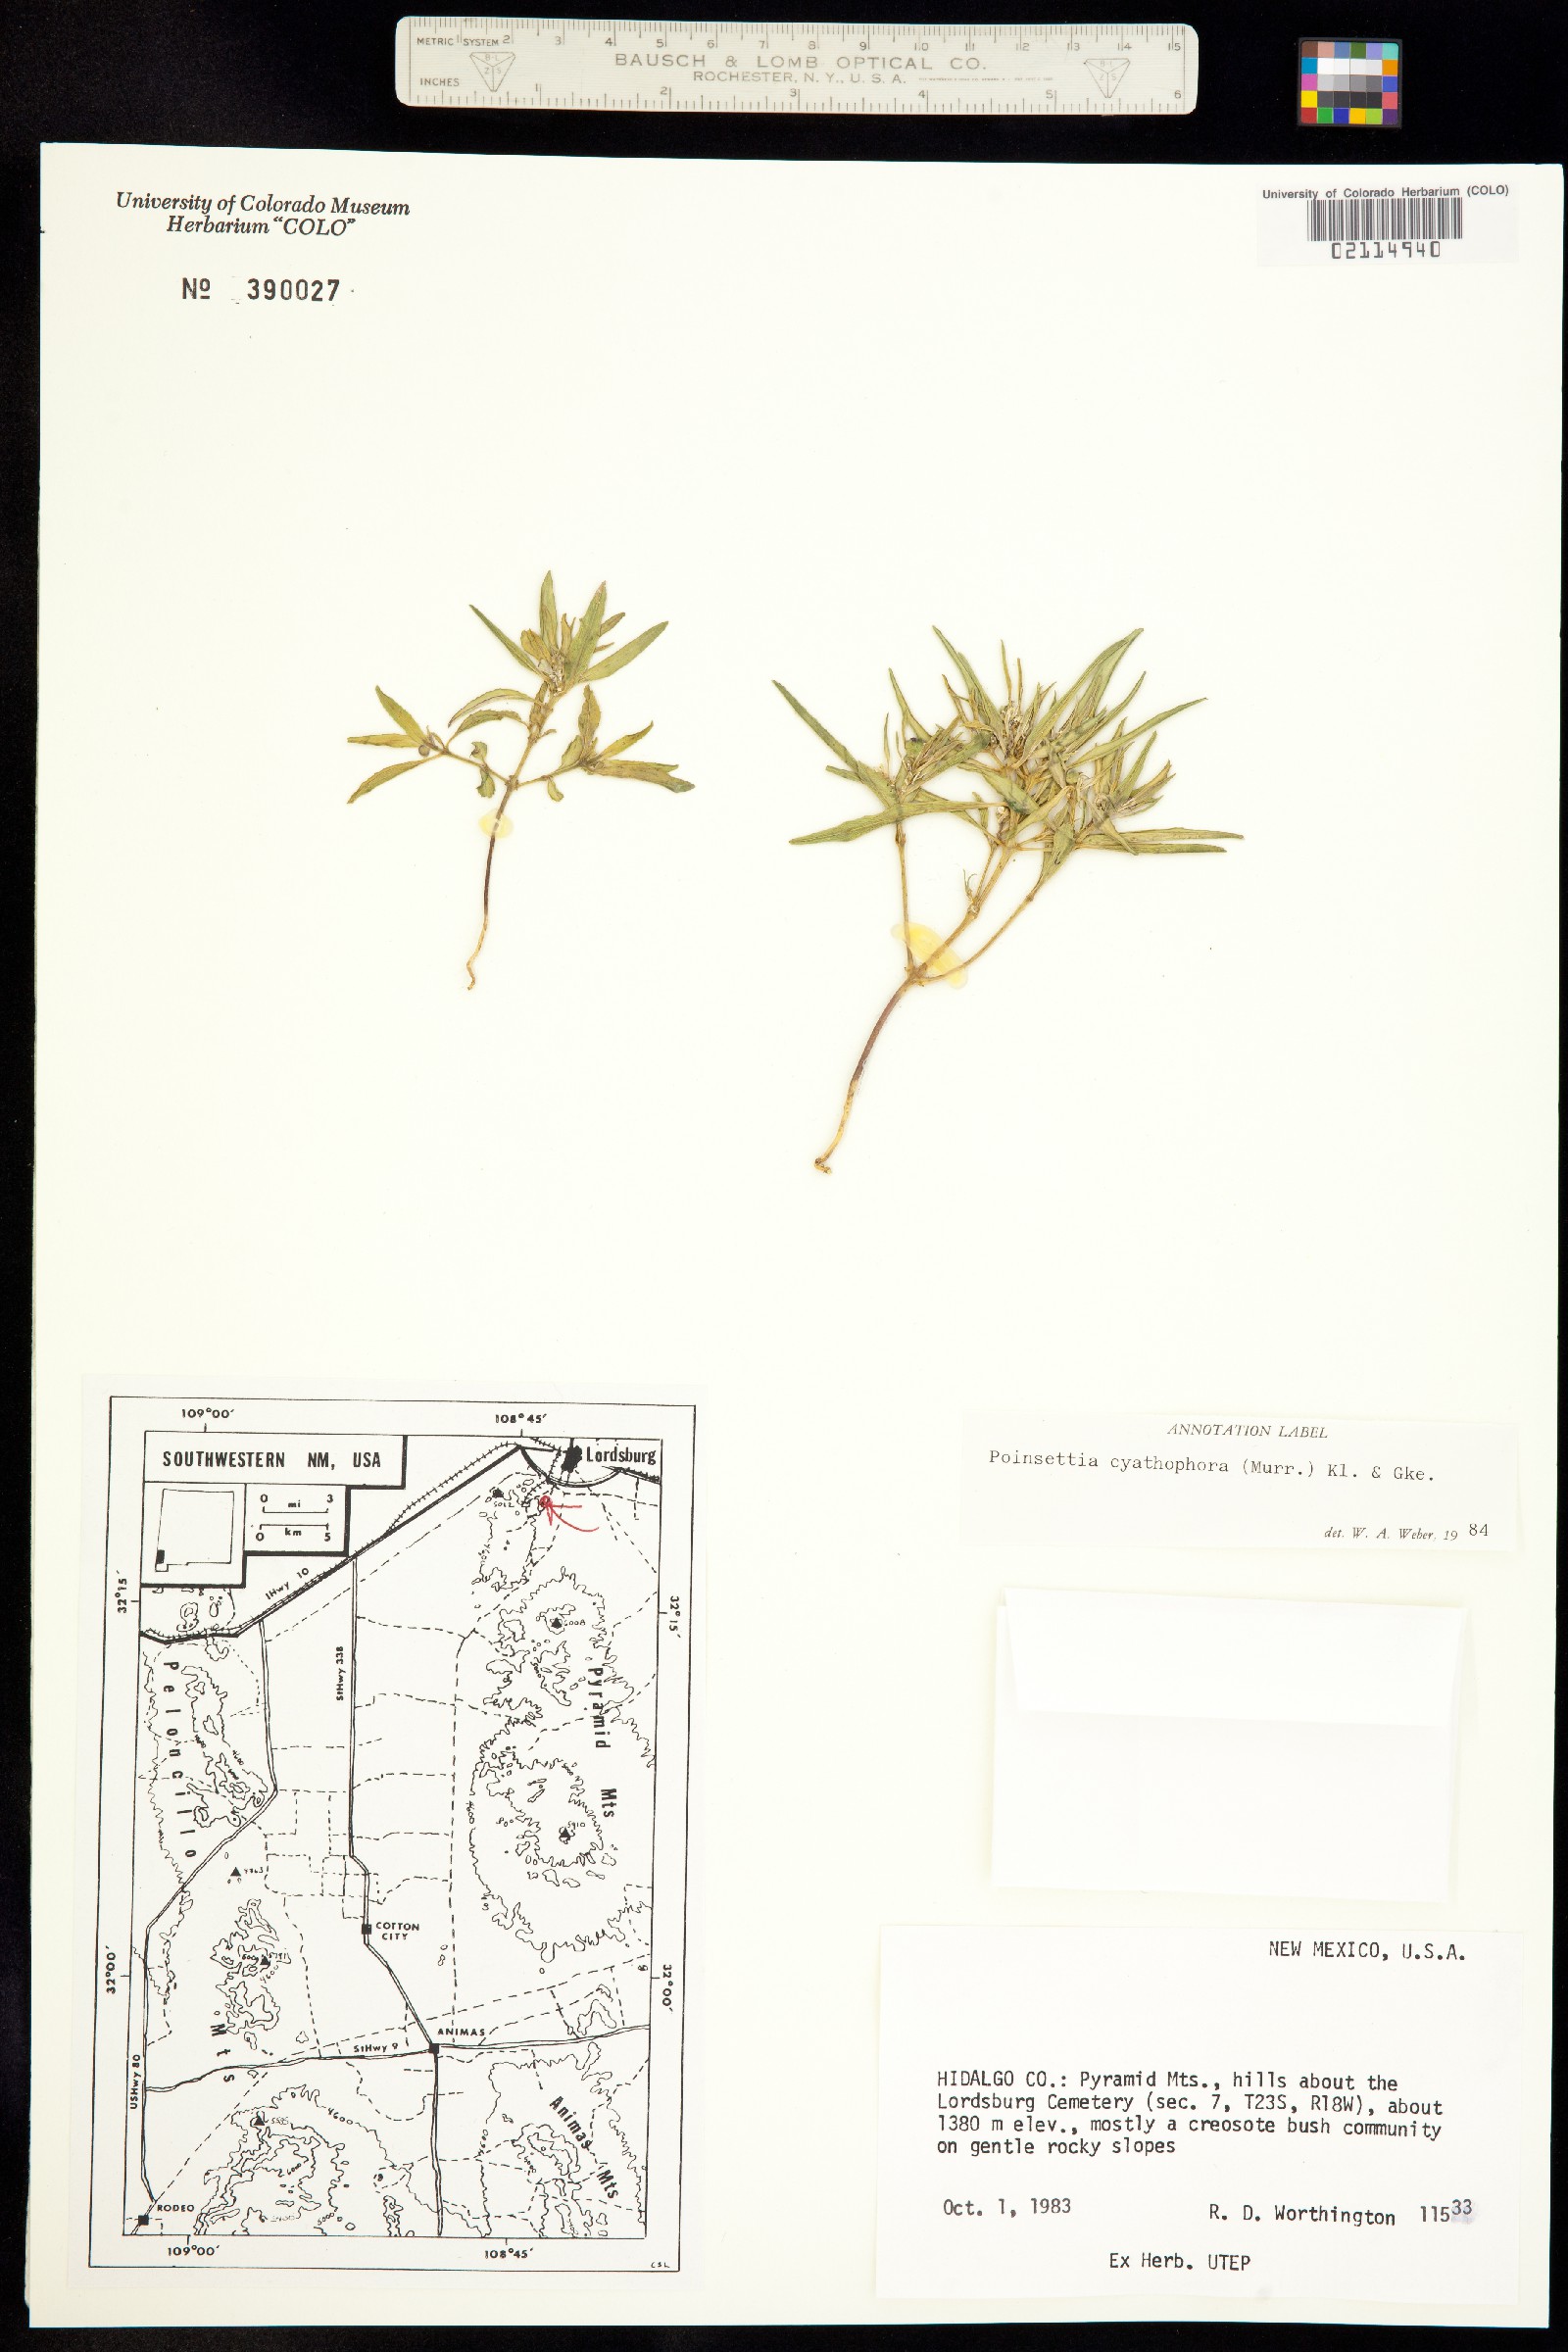 Poinsettia image